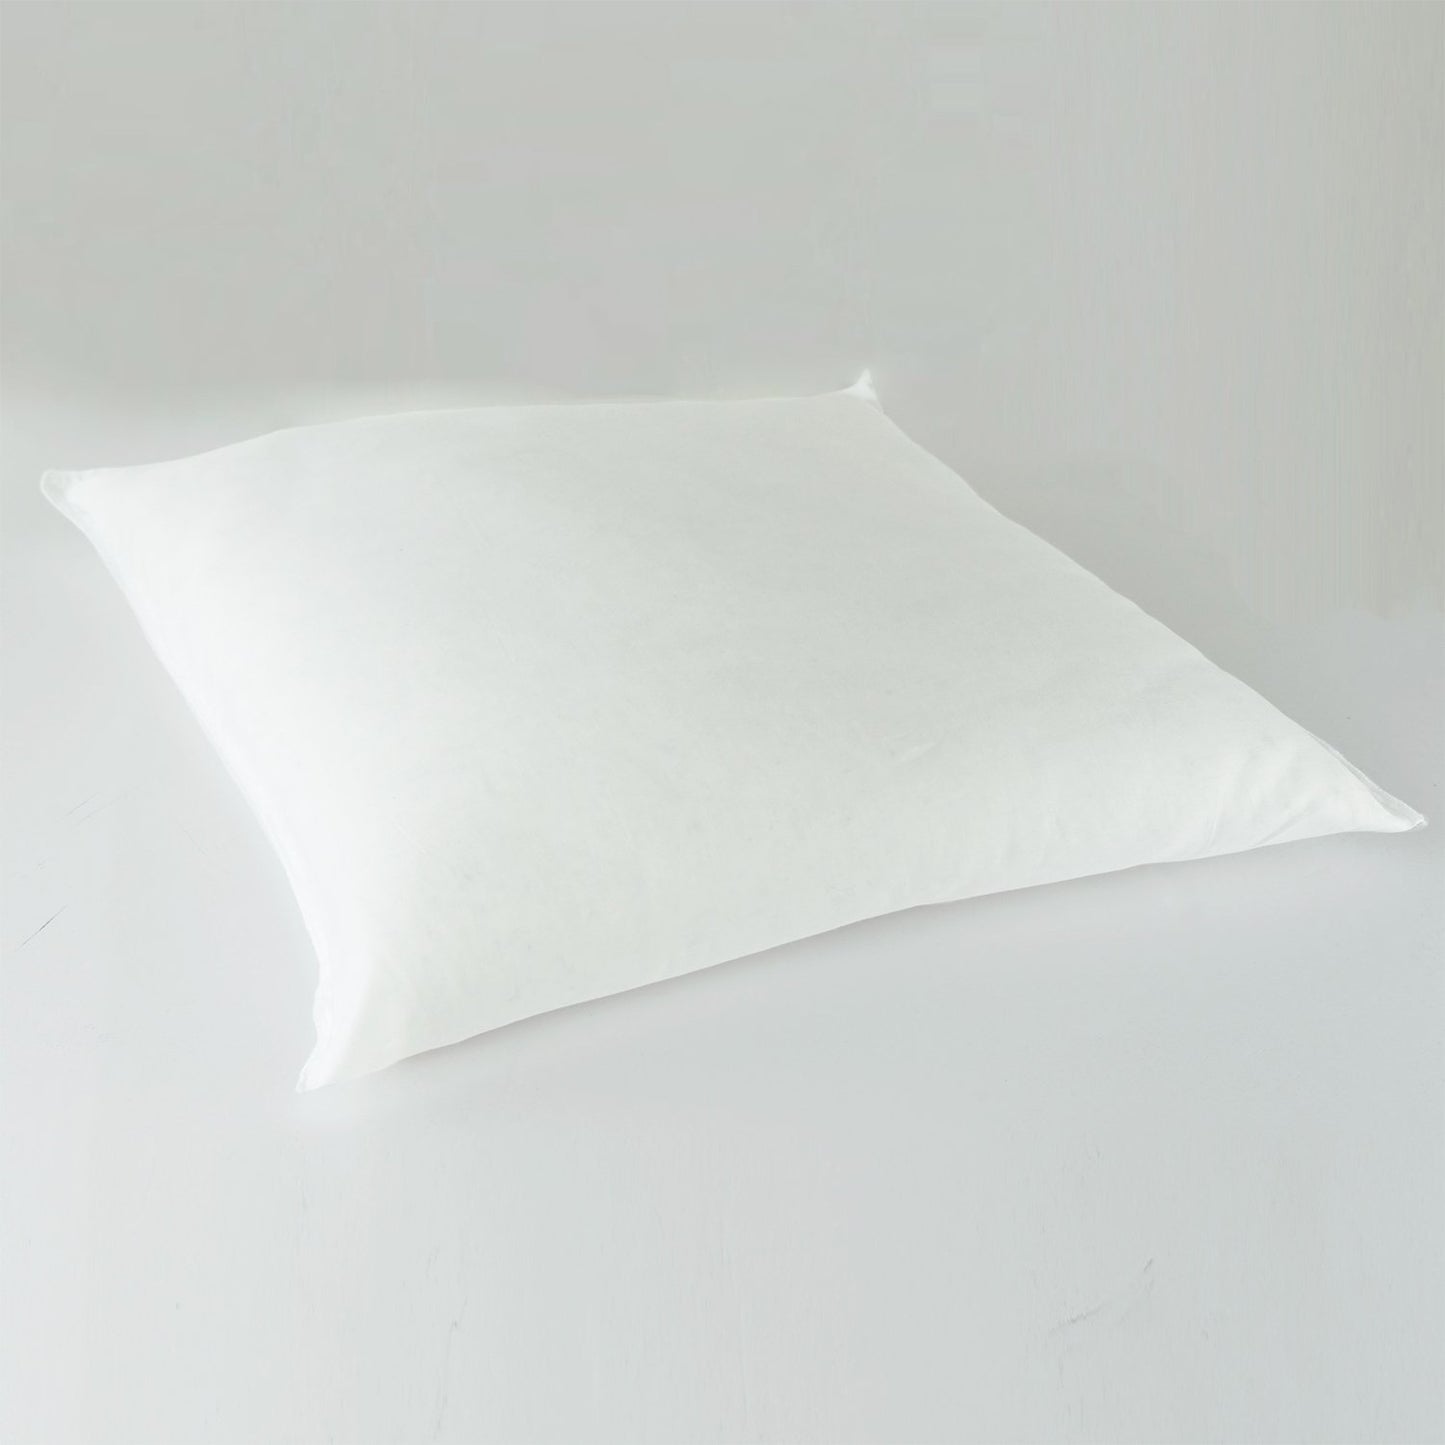 J-Life Hana Navy Zabuton Floor Pillow_Pillows & Shams_Zabuton Floor Pillows_100% Cotton_Reversible_Handmade